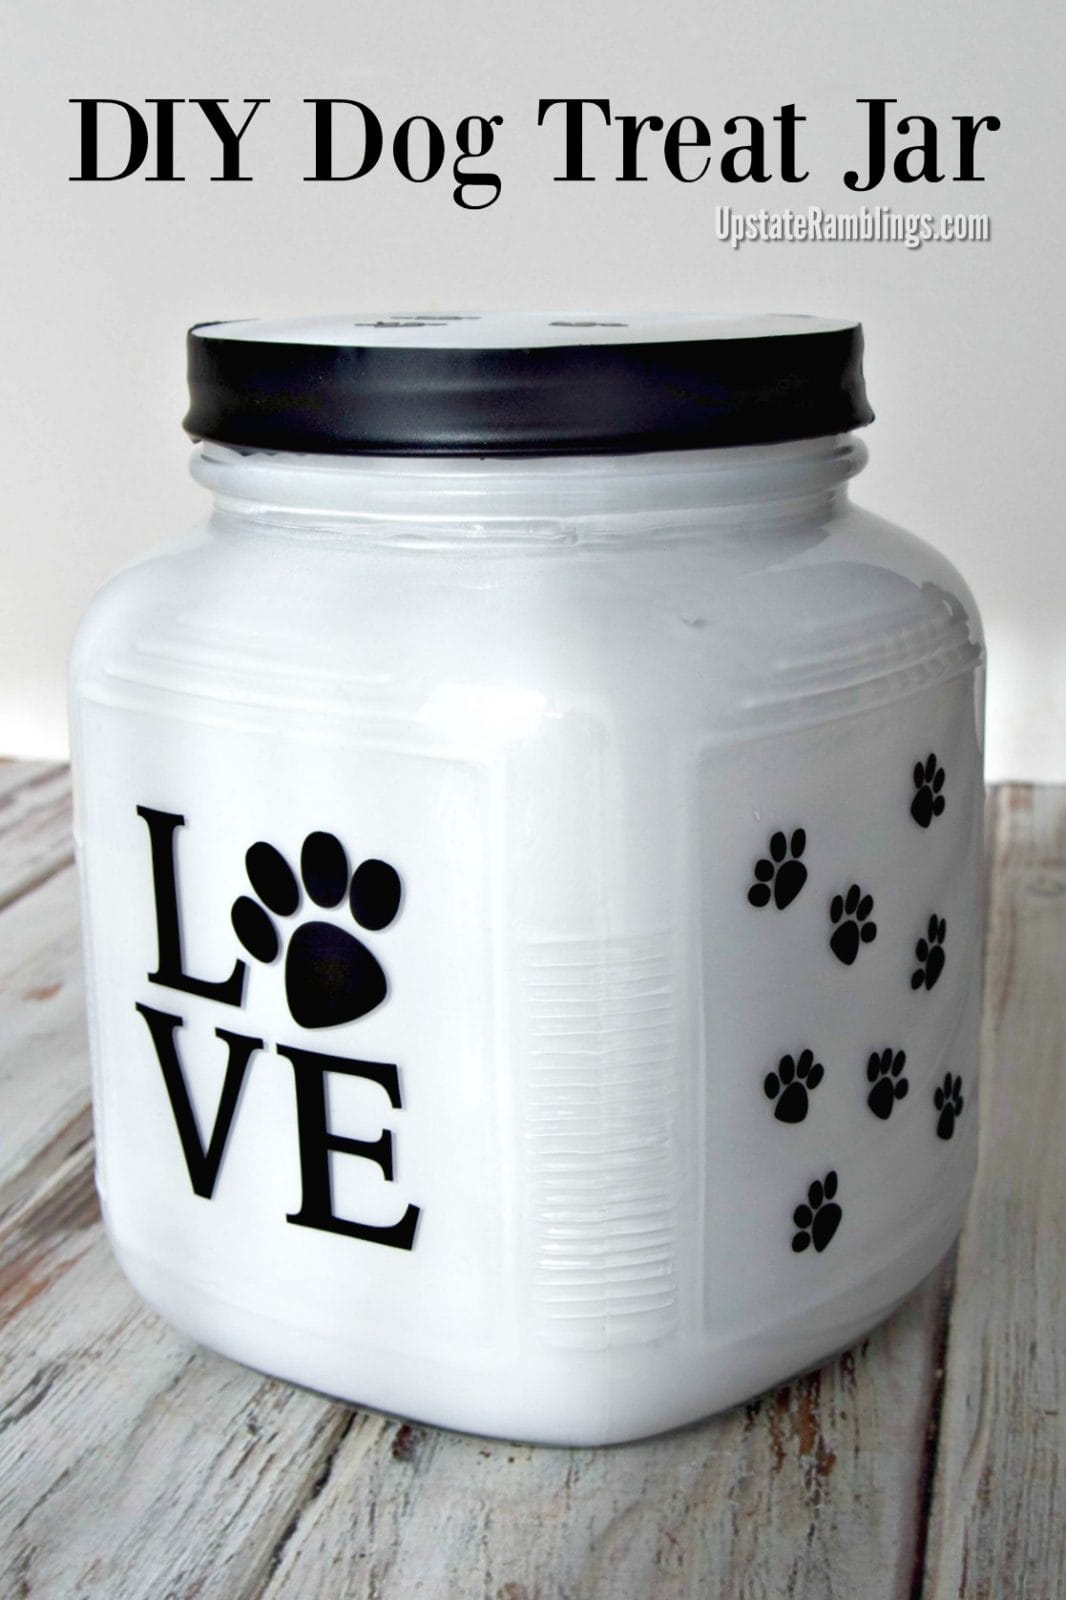 DIY Dog Treat jar